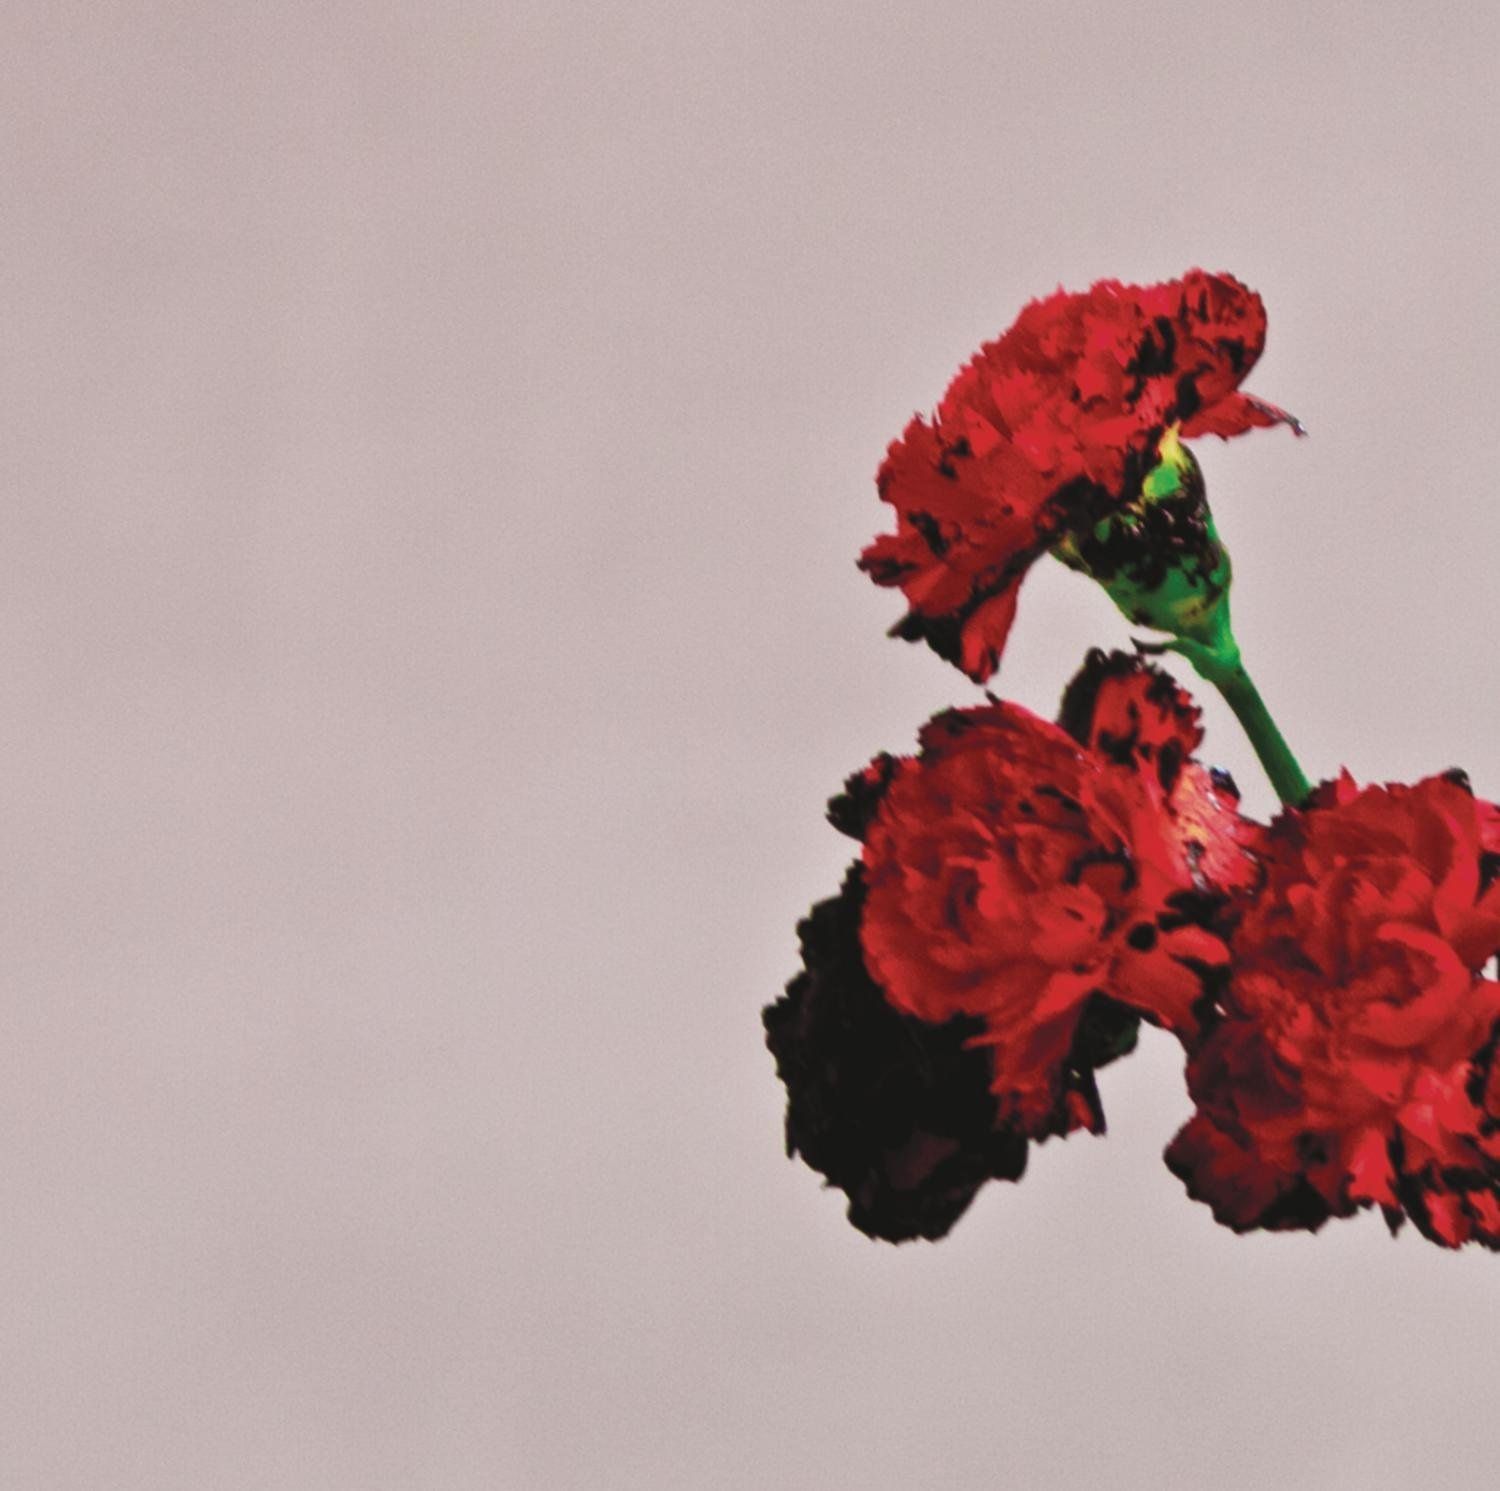 Imagem do álbum Love In The Future do(a) artista John Legend